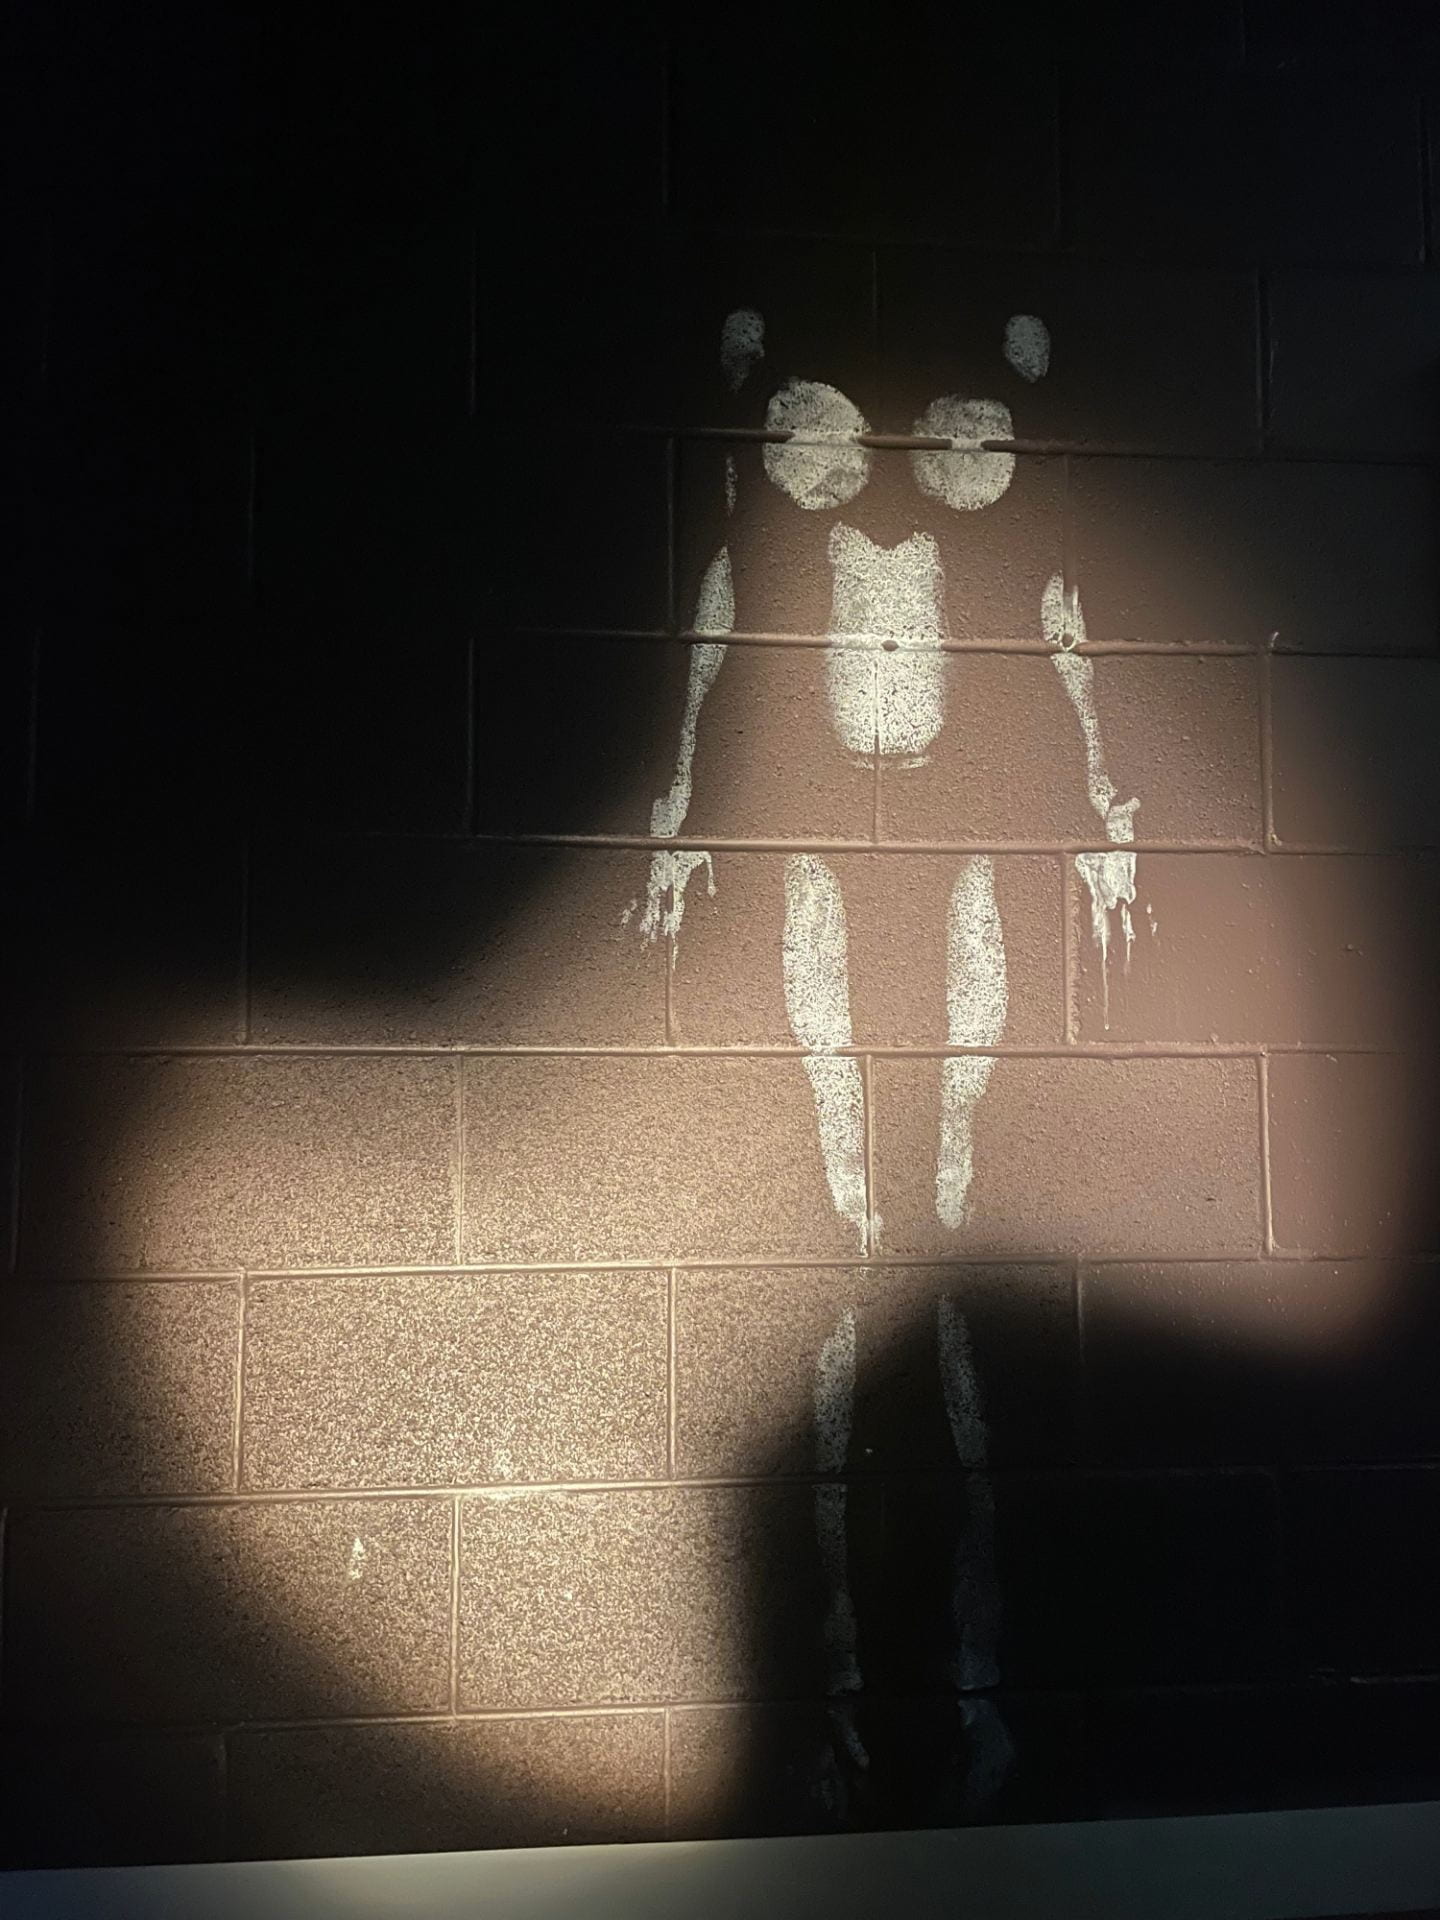 white body imprint against dark wall, curved spotlight diagonally shining on the figure